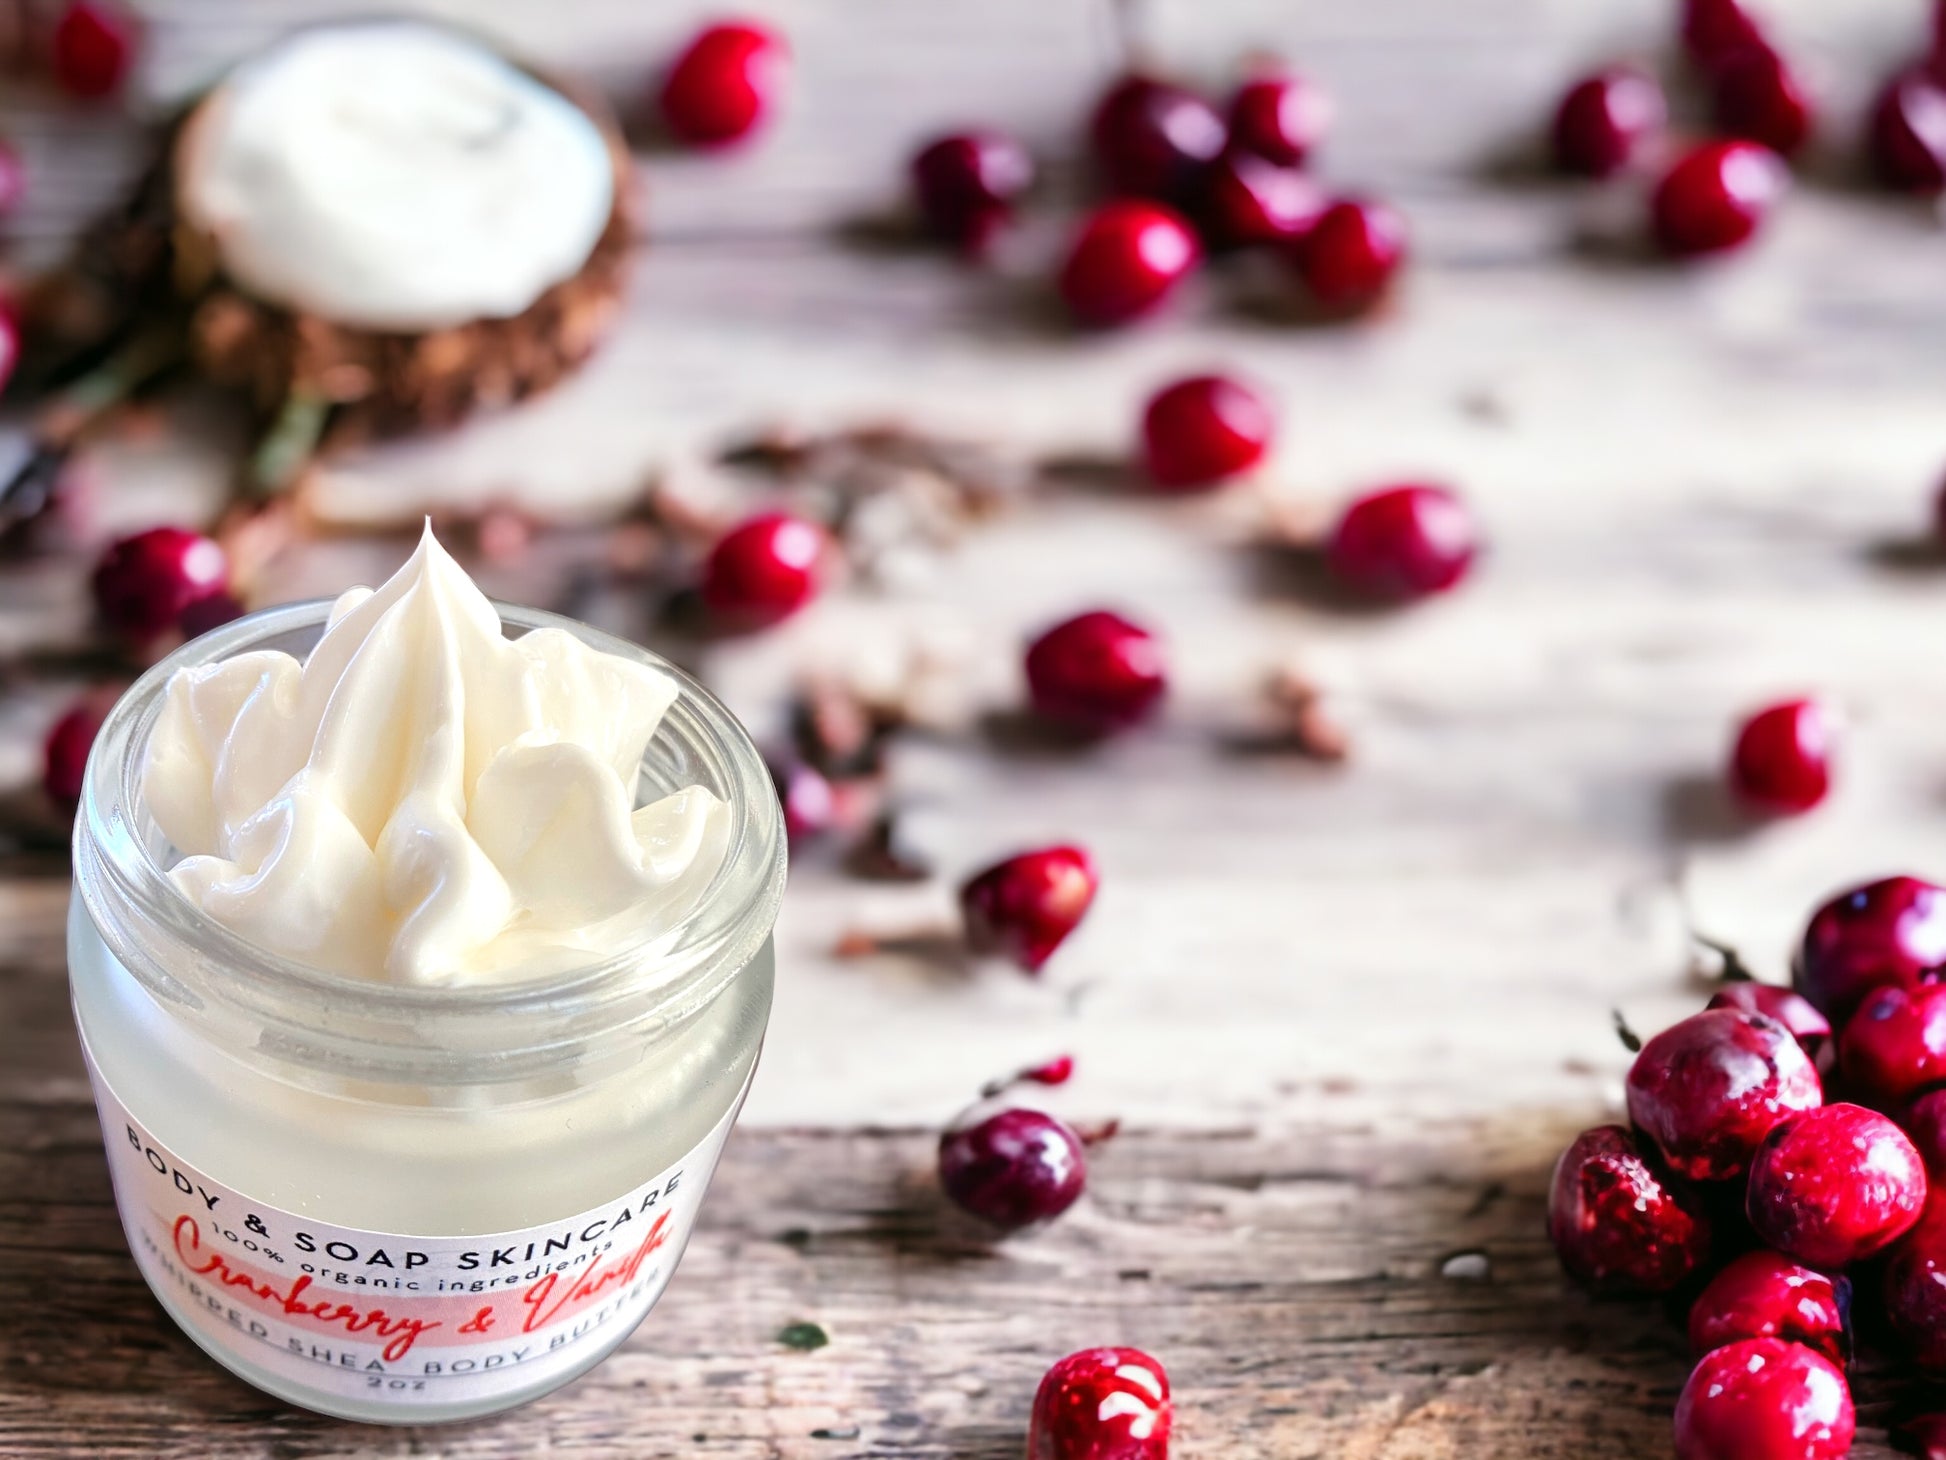 Whipped Shea Body Butter: Cranberry & Vanilla - Body & Soap Skincare